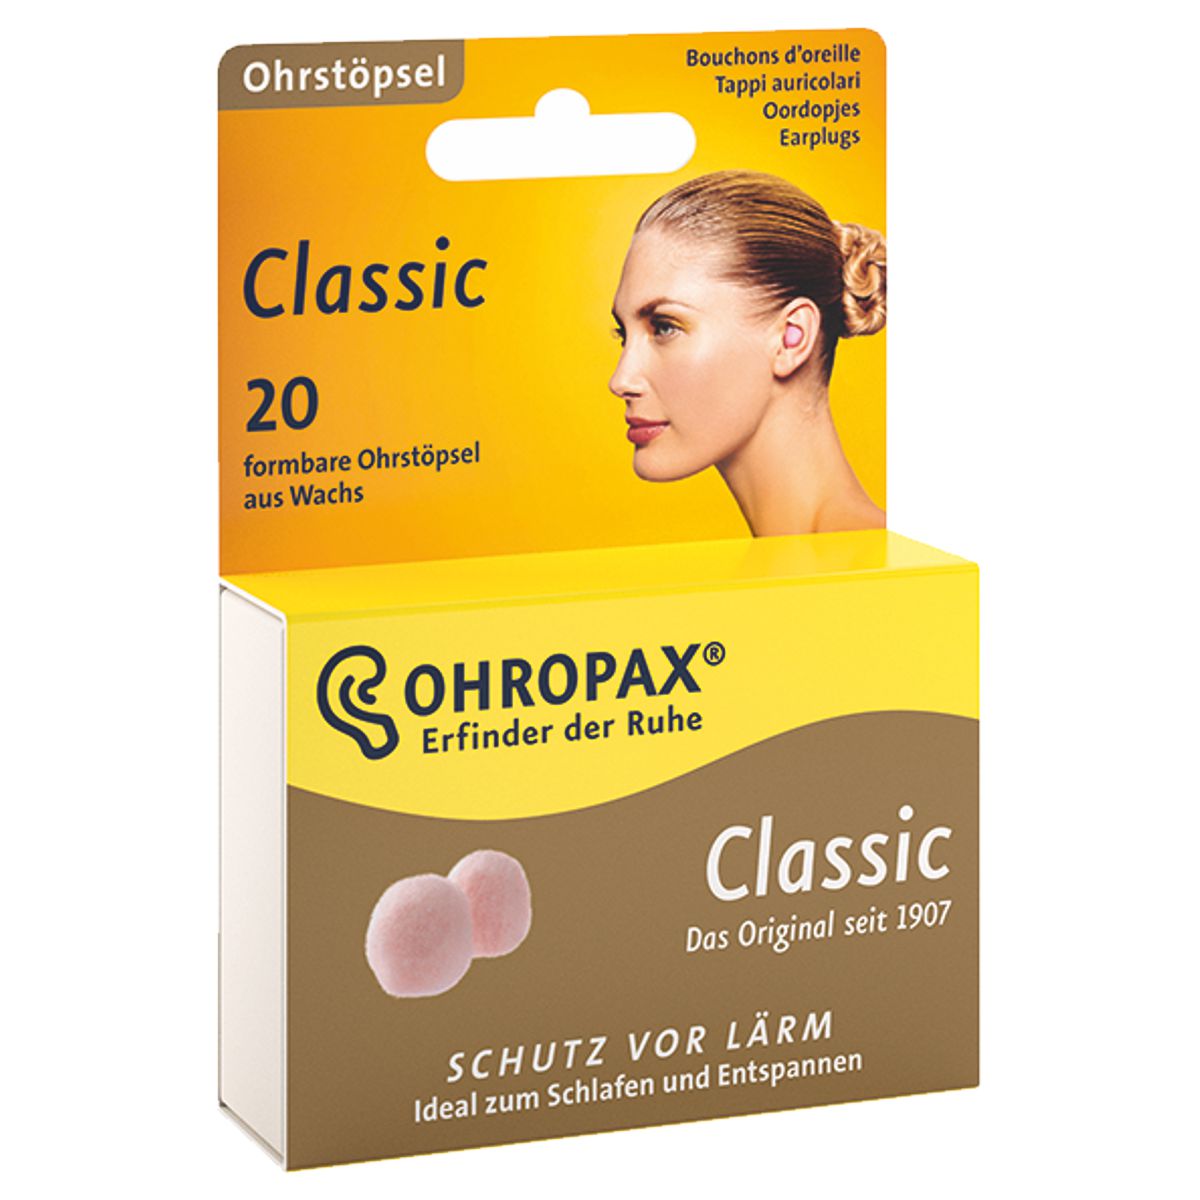 Ohropax Classic - der Klassiker aus Wachs